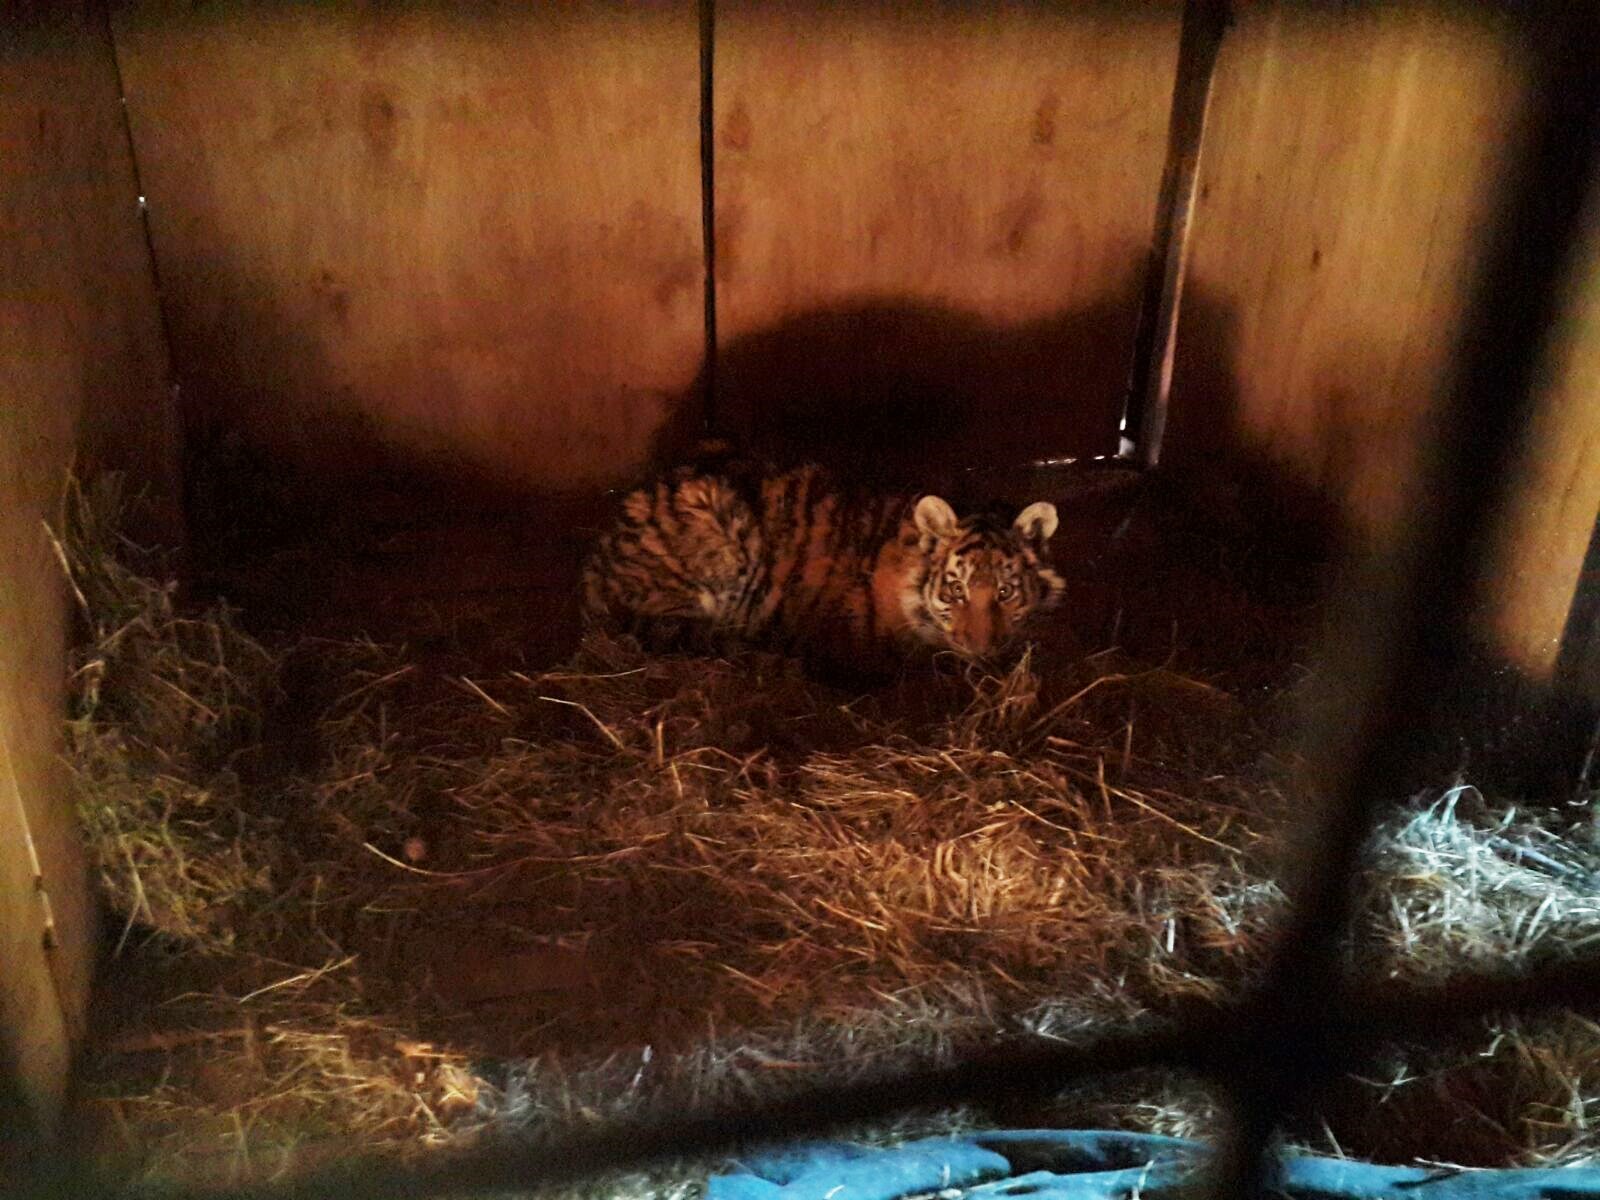 Tiger cub gets well